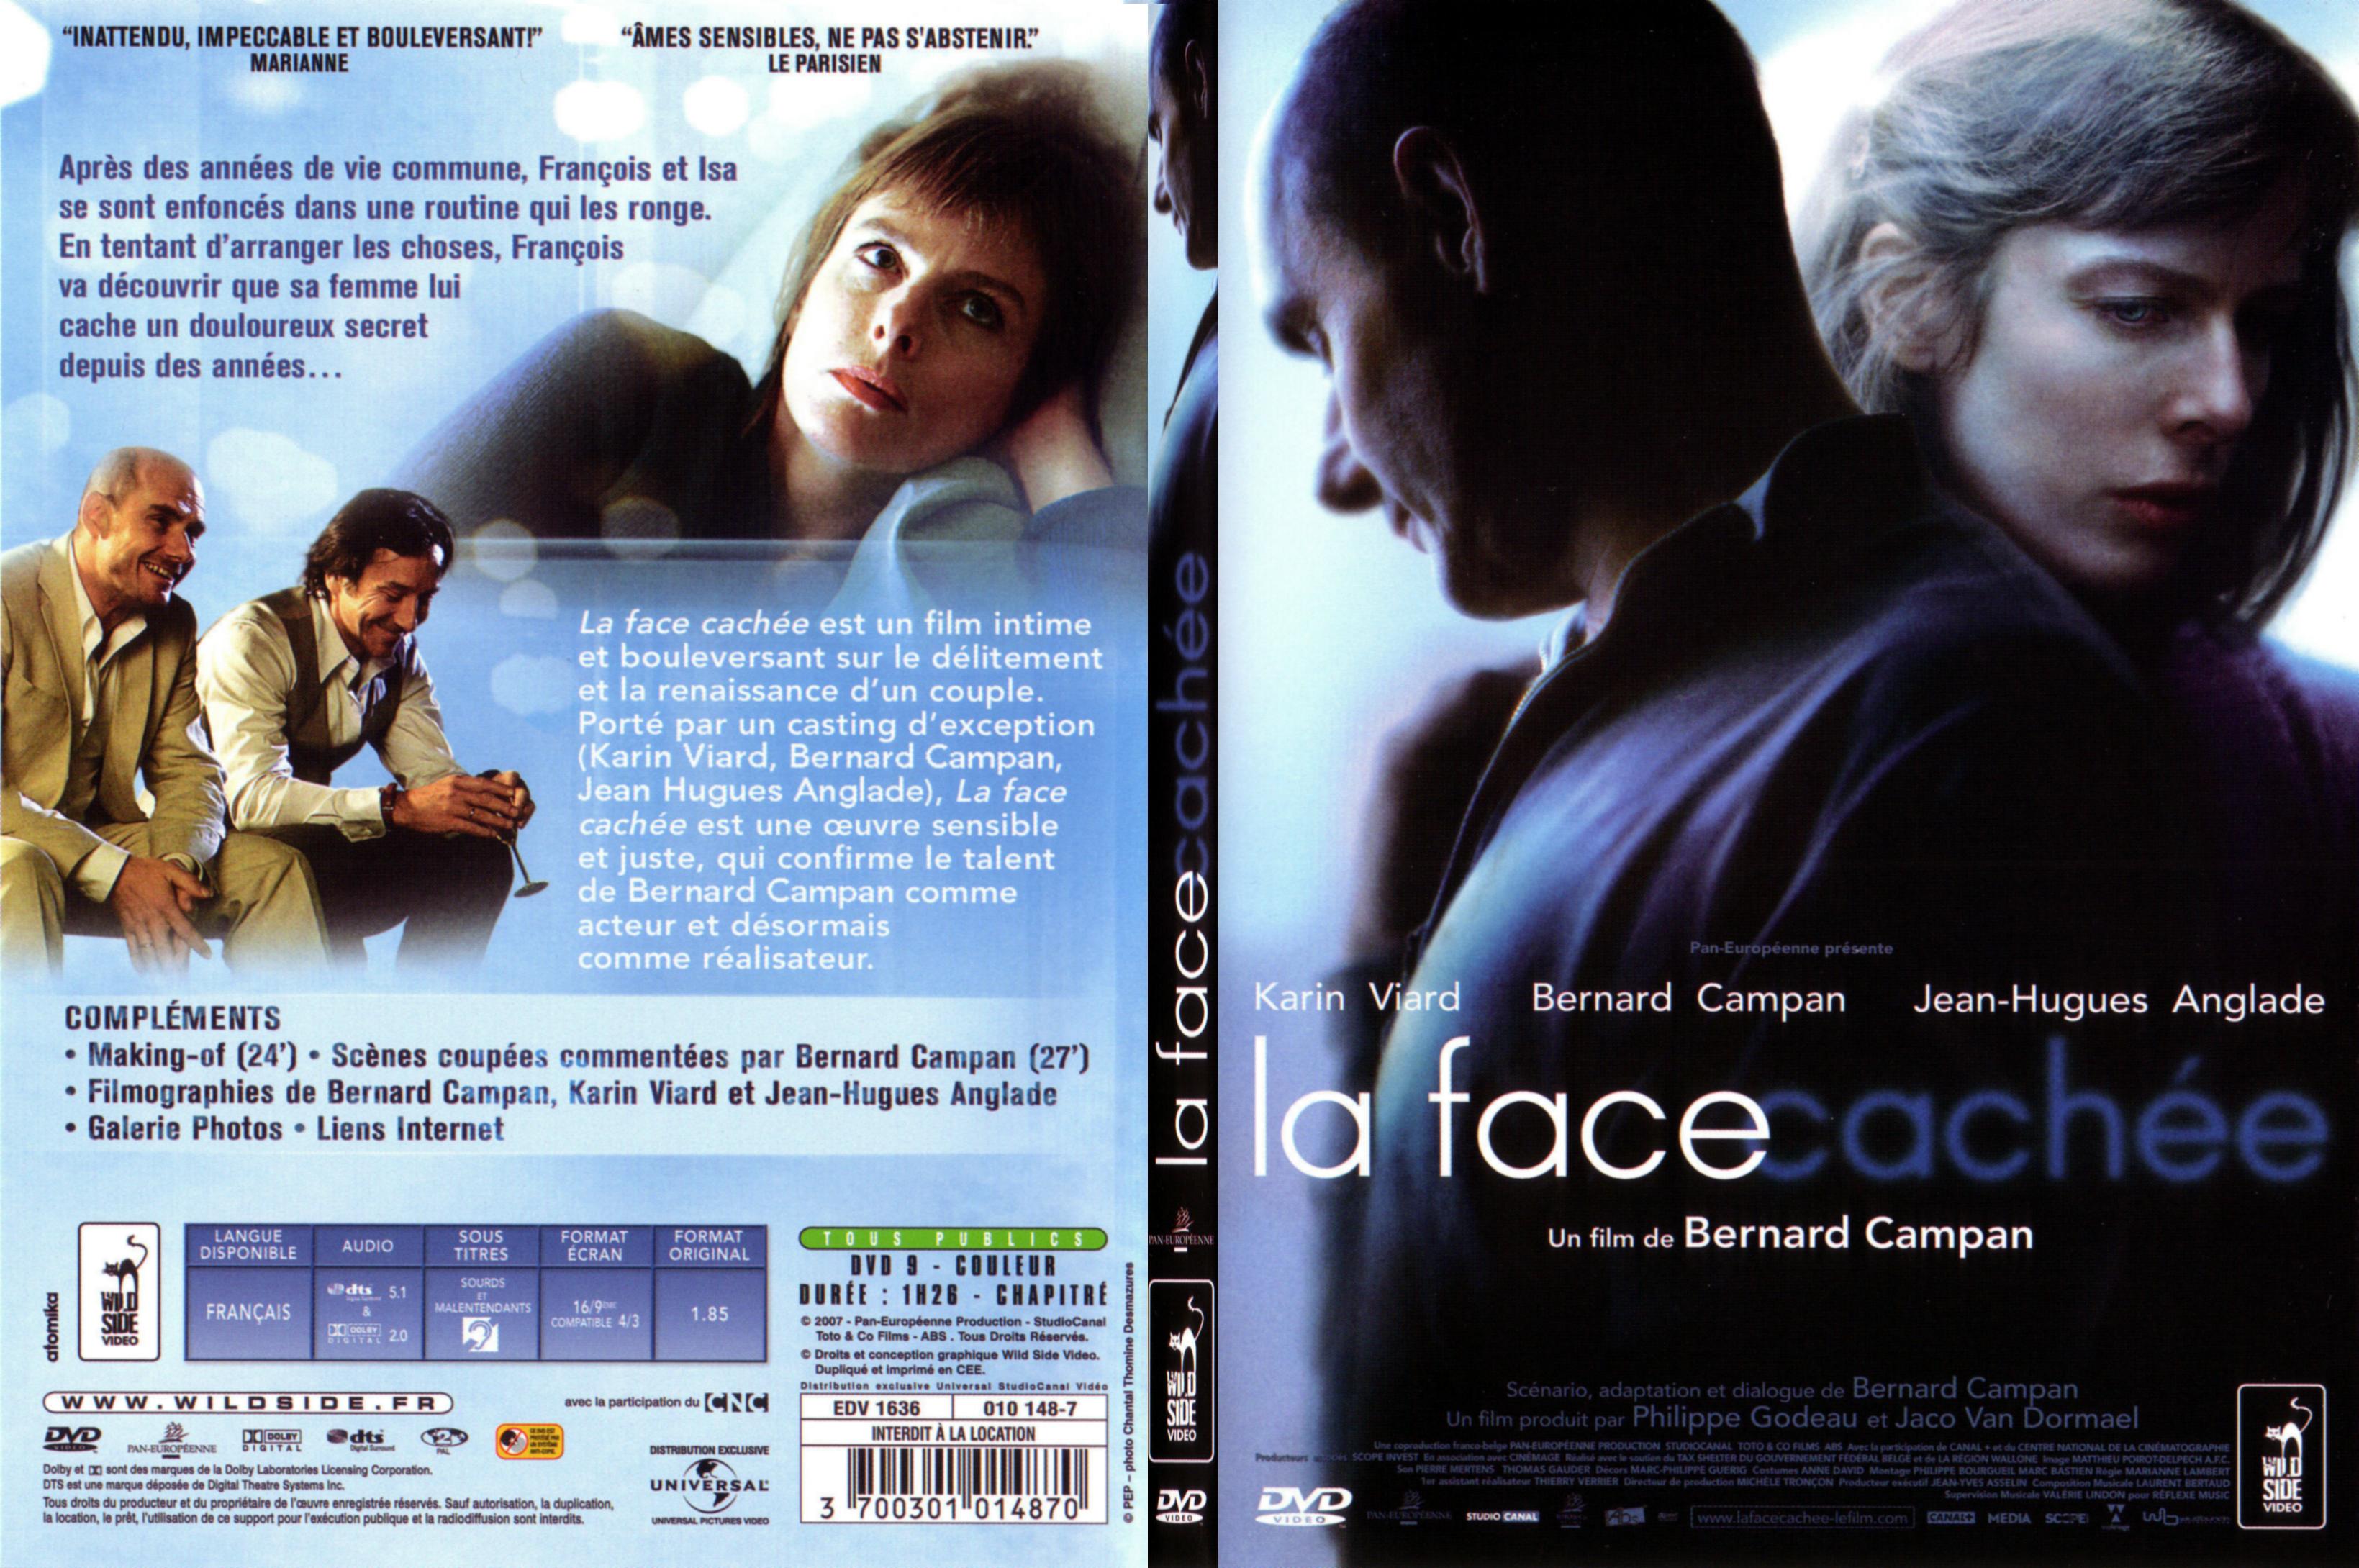 Jaquette DVD La face cache - SLIM